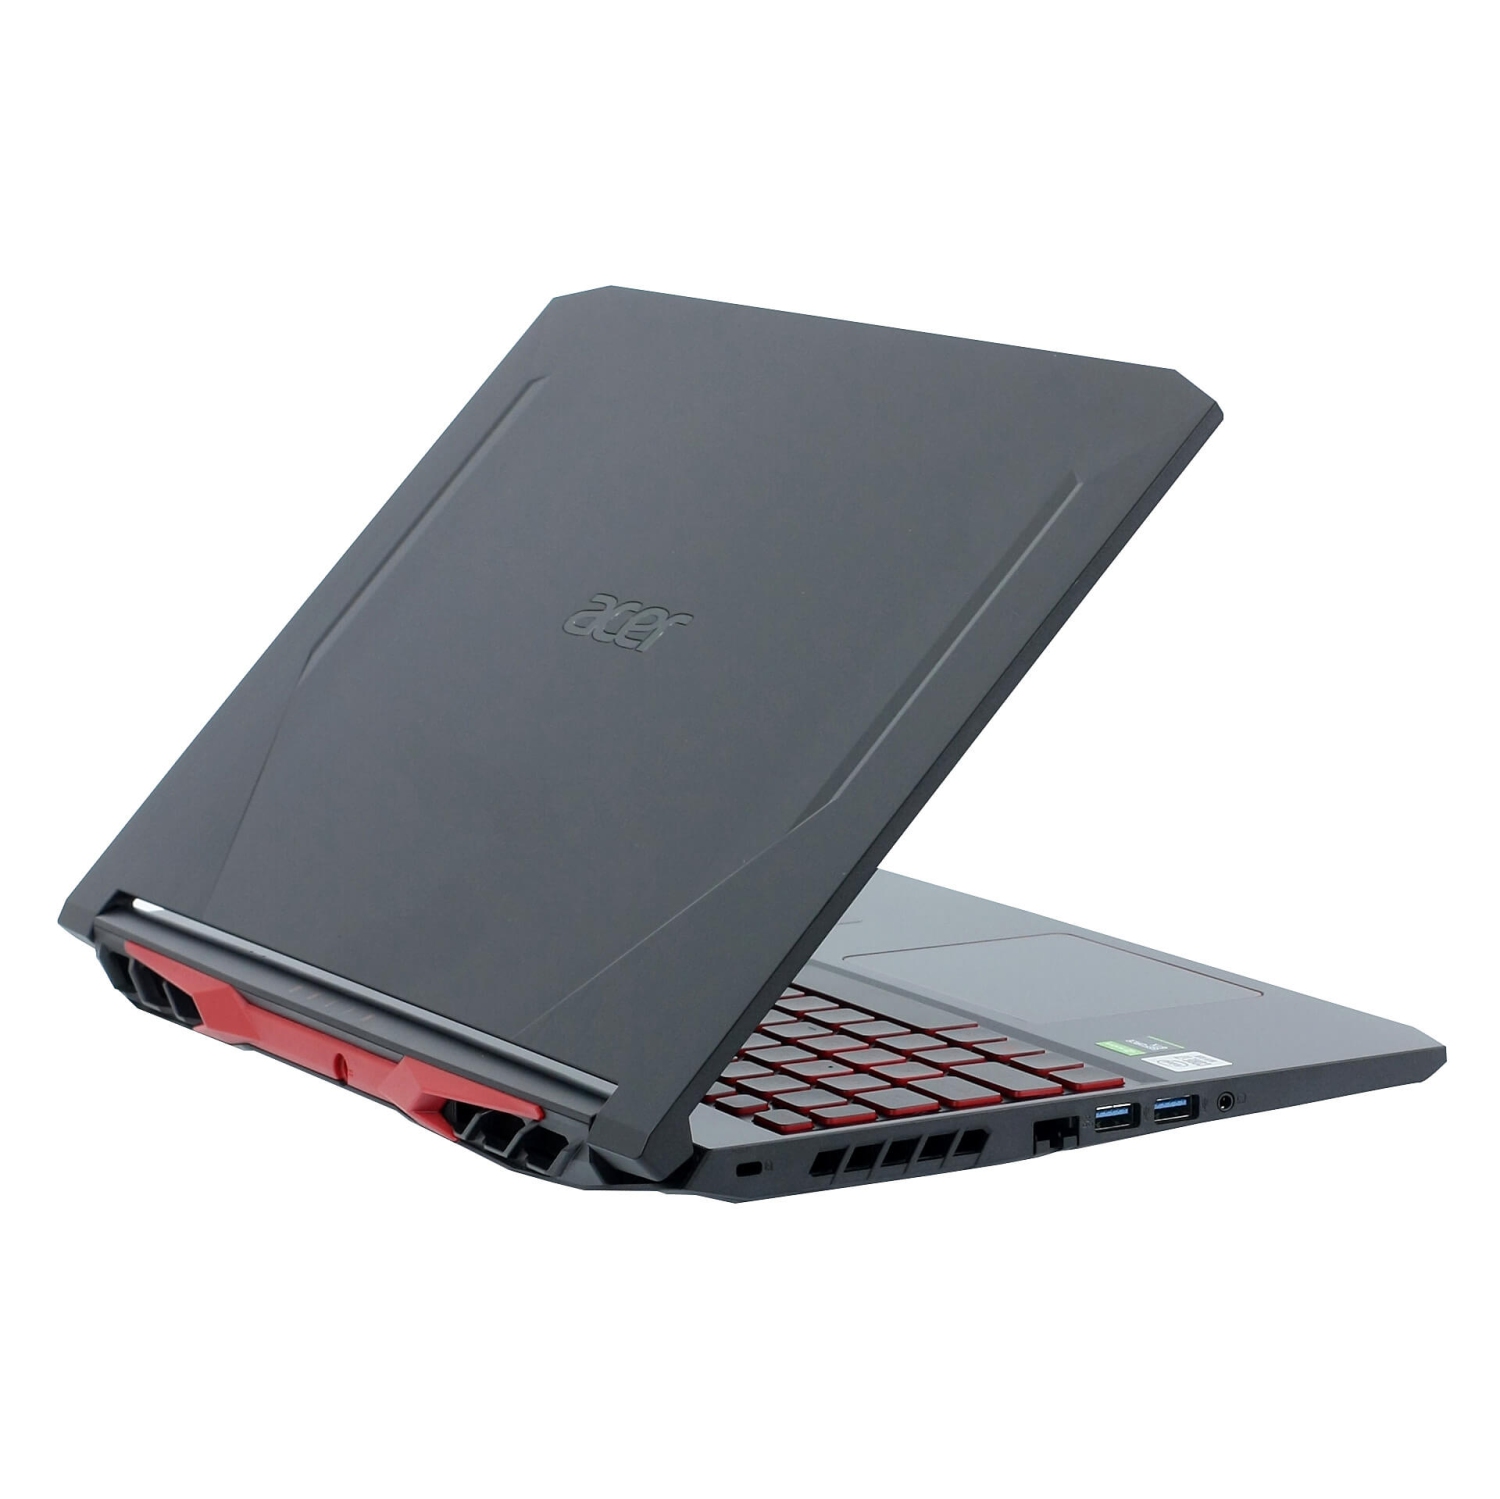 Refurbished Good - Acer Nitro 5 AN515-55-50Z3 15.6” Gaming Laptop with Intel® i5-10300H, 256GB SSD, 8GB RAM, NVIDIA GTX 1650 & Windows 10 Home - Obsidian Black